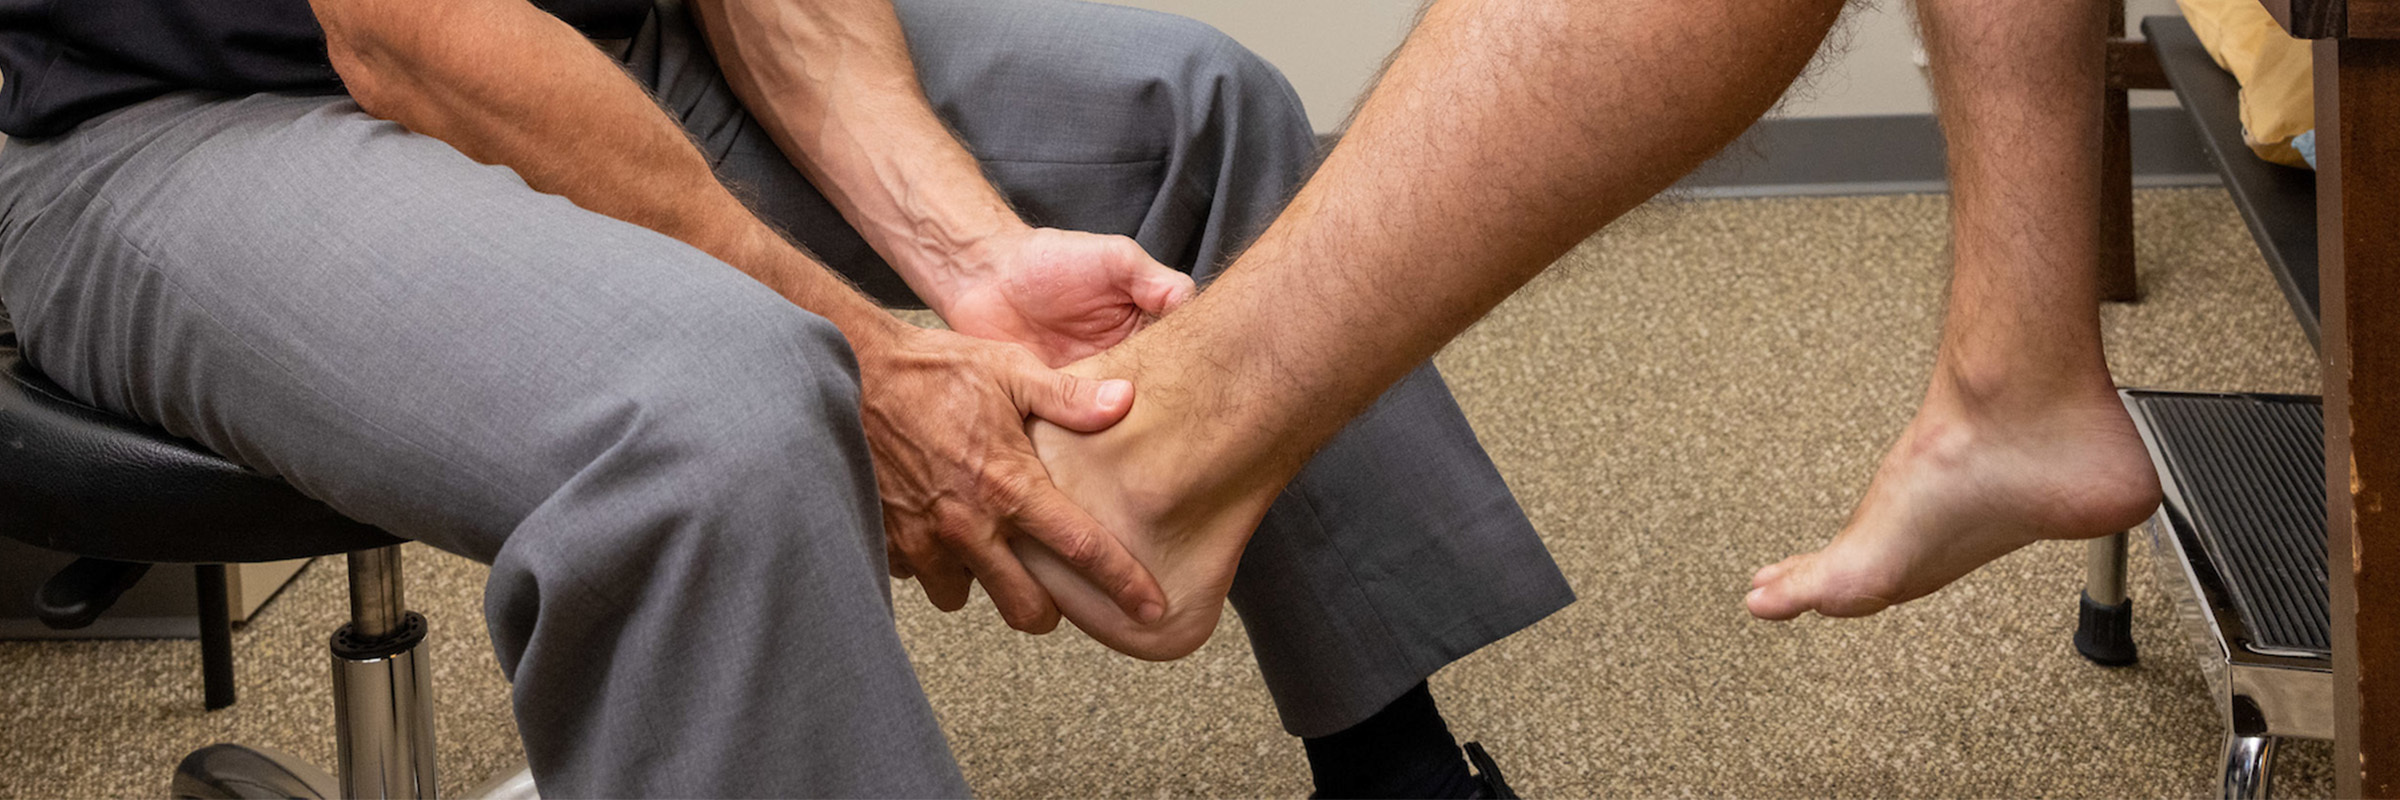 Foot & Ankle Rehabilitation  Advanced Orthopaedics & Sports